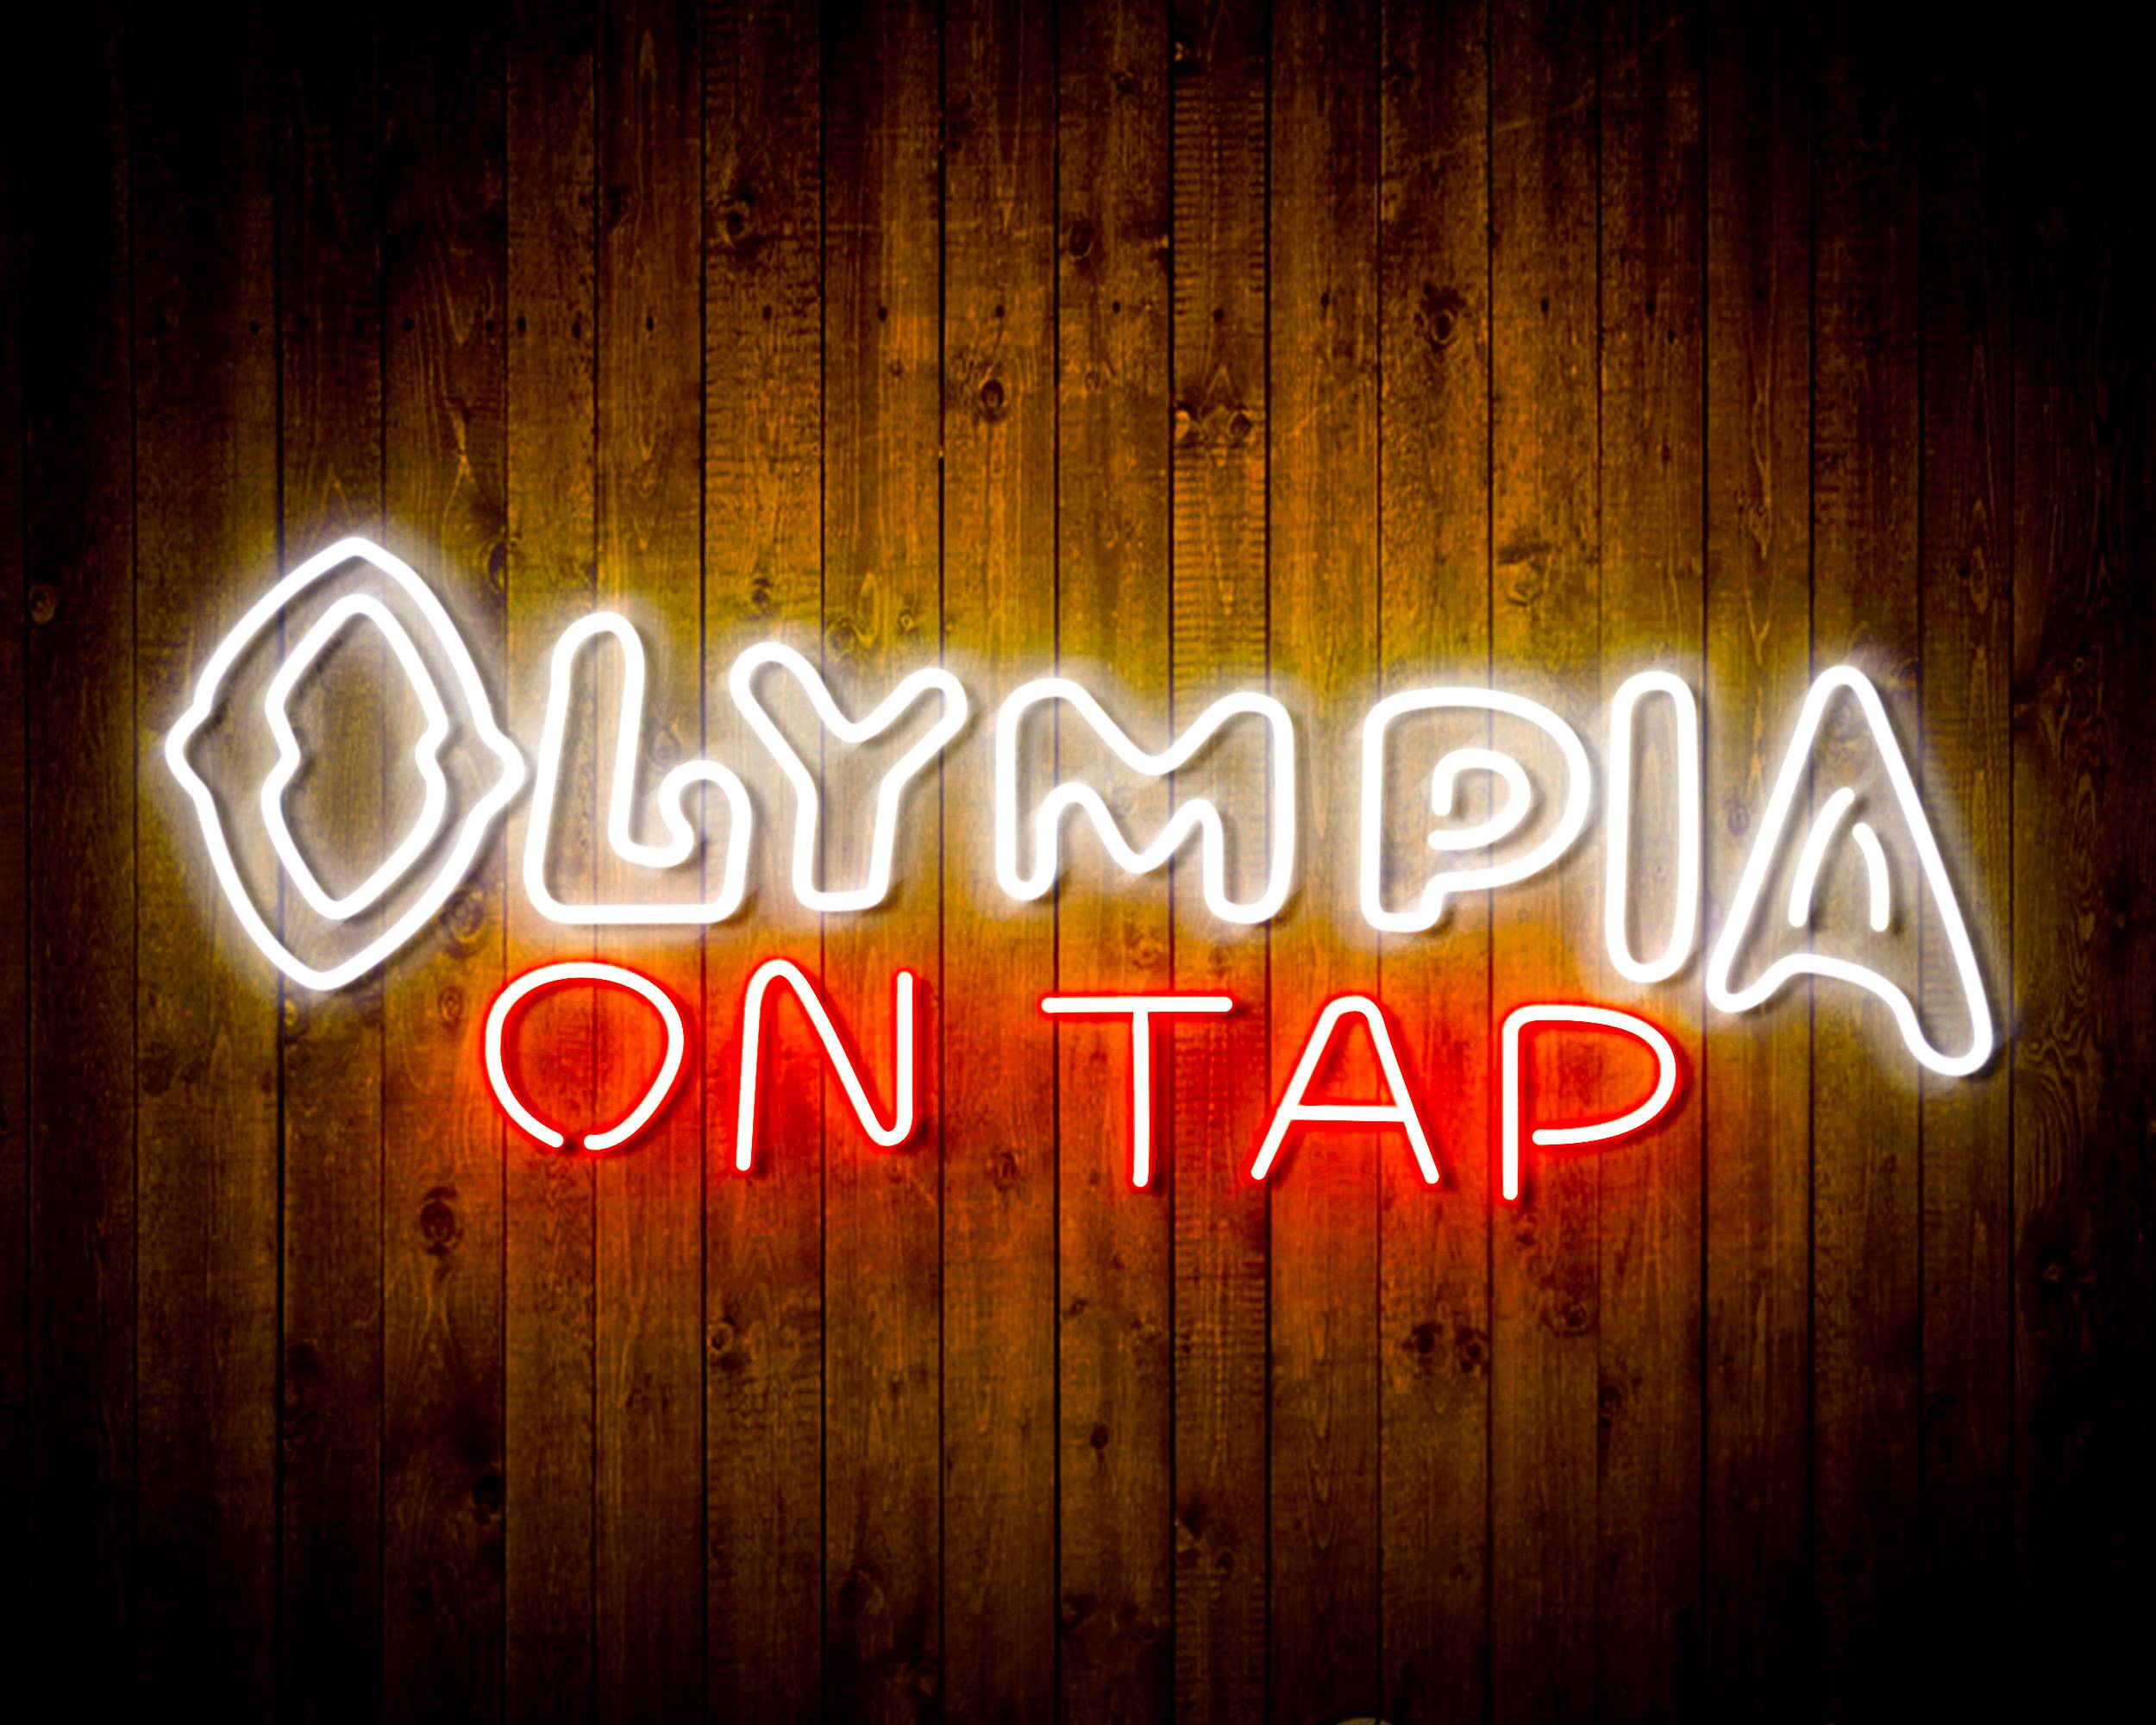 Olympia On Tap Handmade LED Neon Light Sign